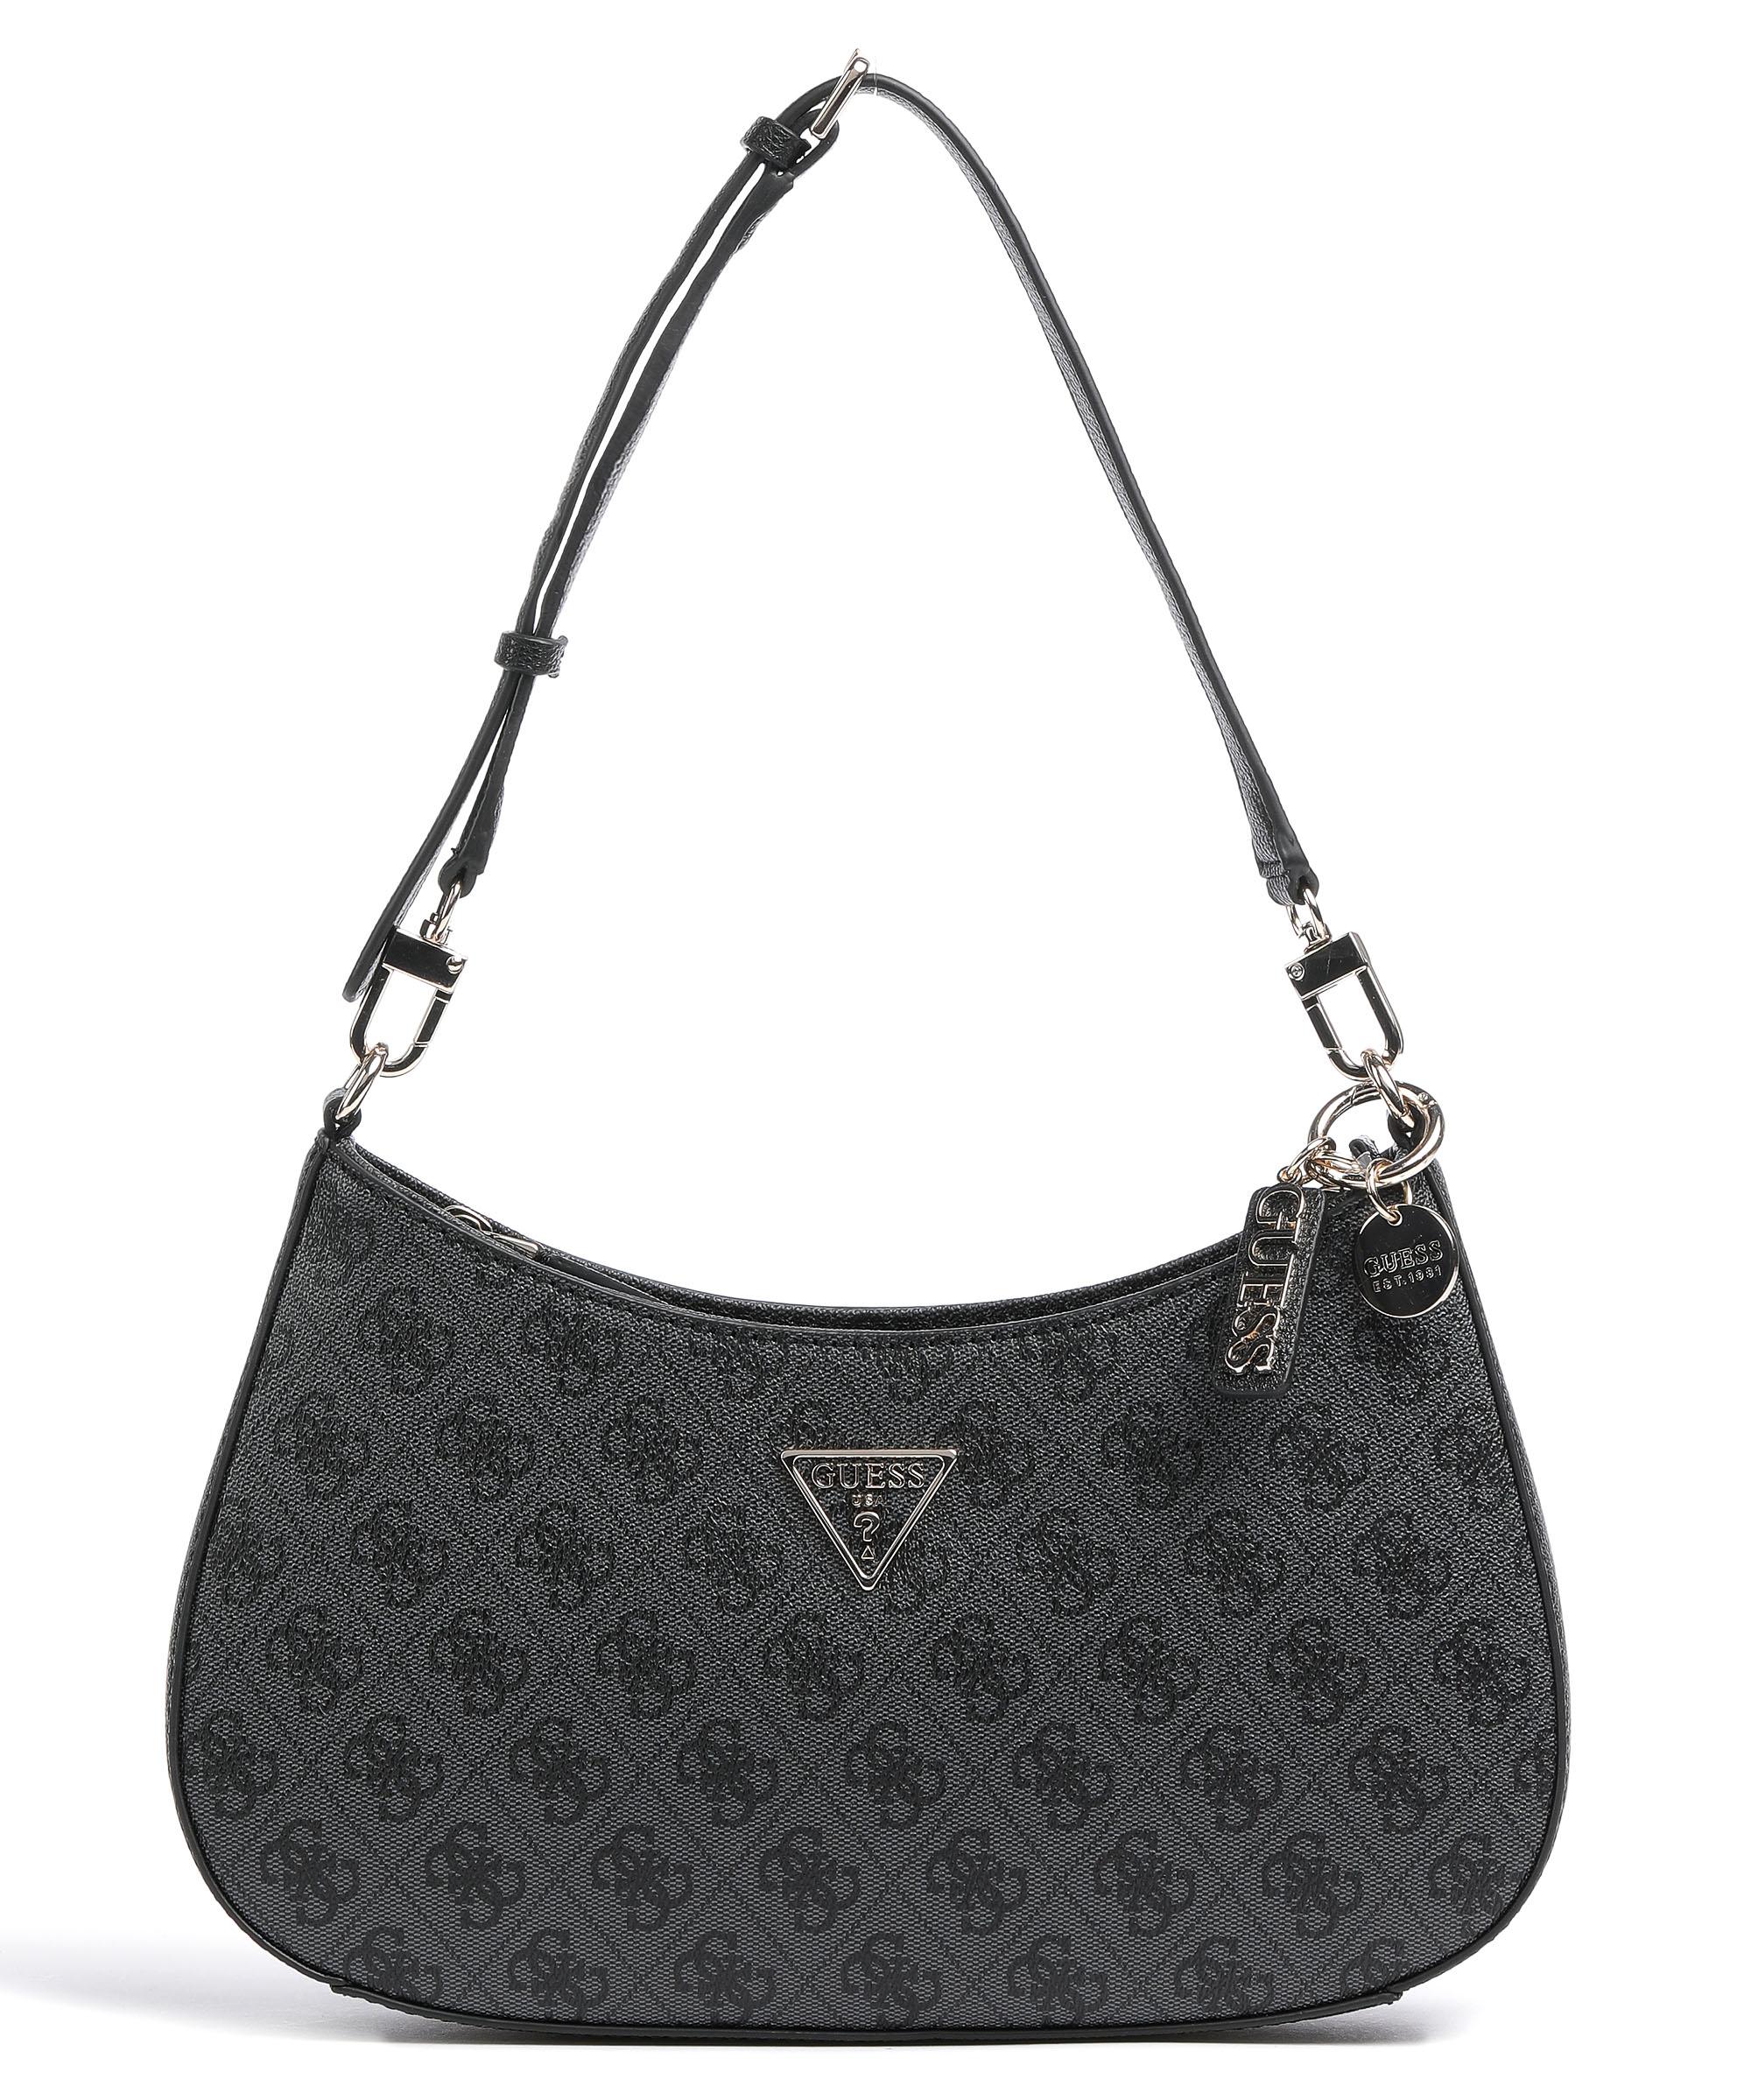 Buy Pre-Owned Authentic Luxury Guess Handbag Online | Luxepolis.Com